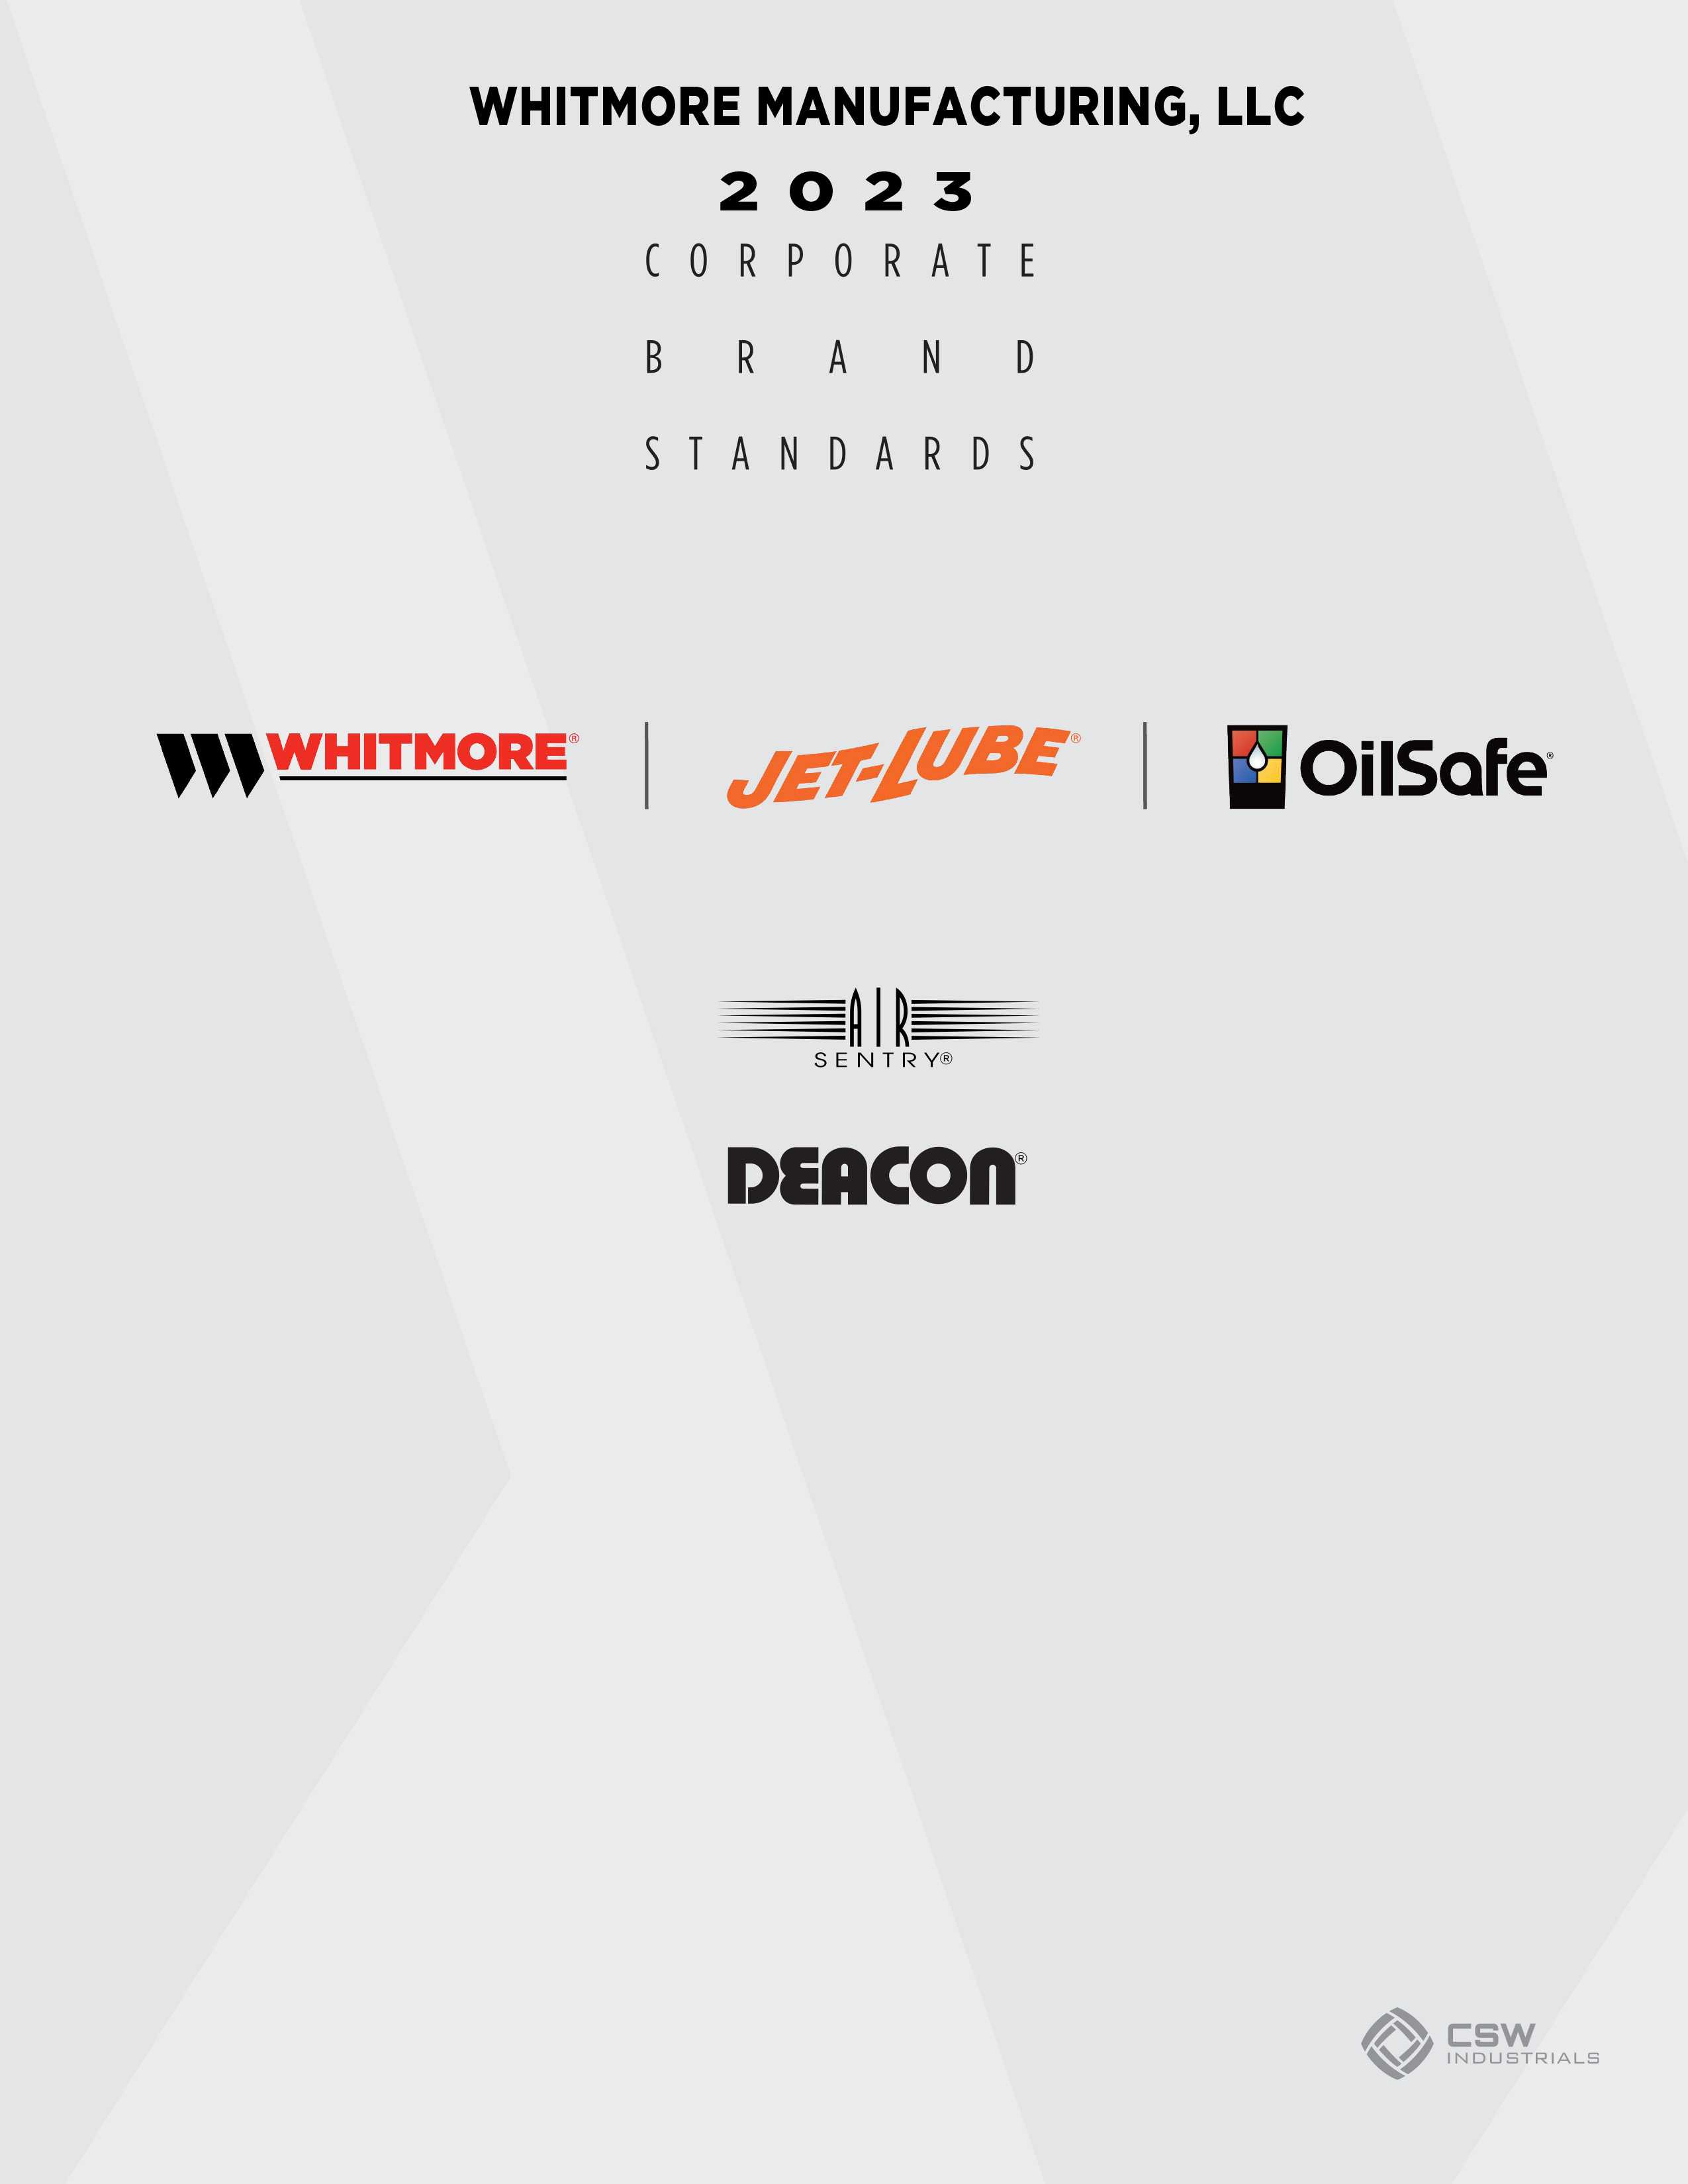 Whitmore and Jet-Lube Branding Standards 2023